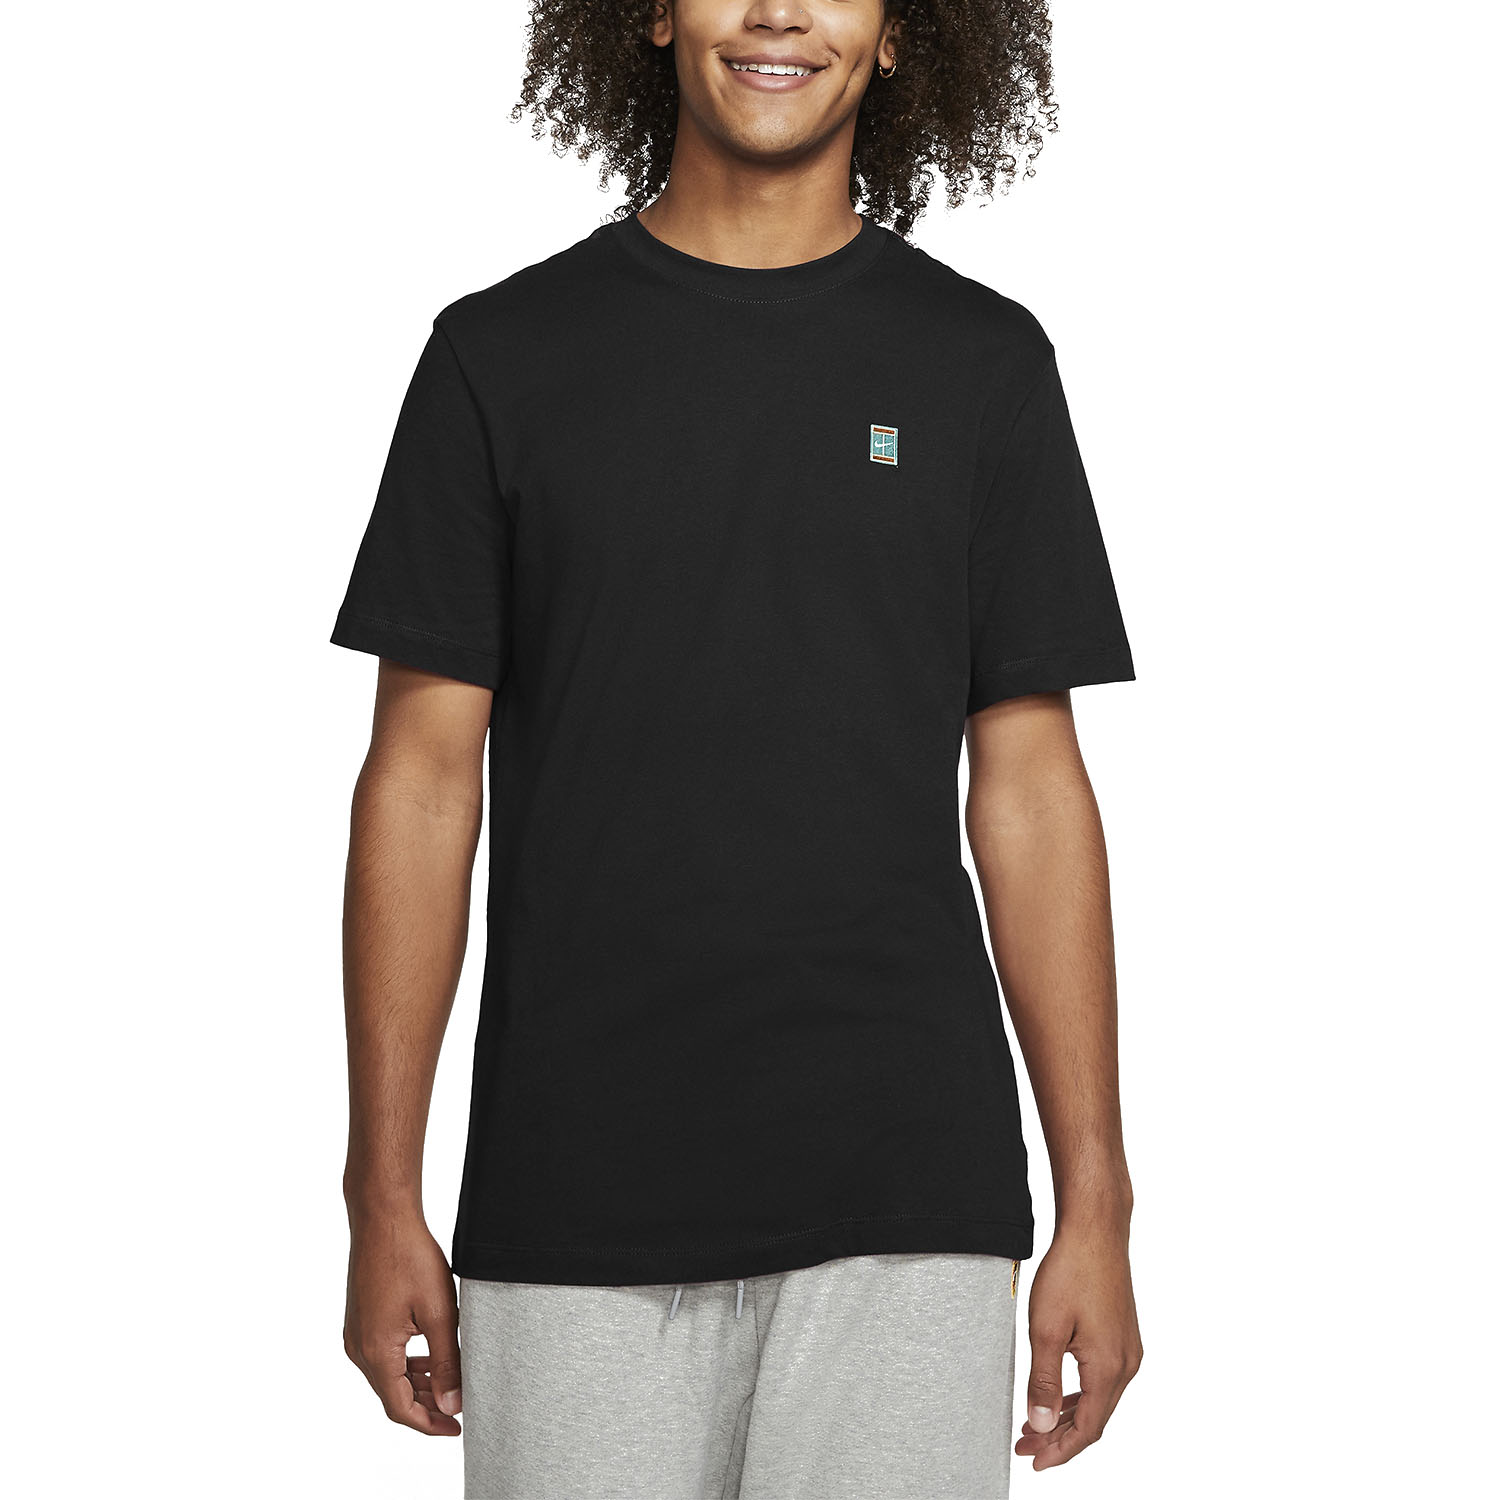 Court Camiseta de Tenis Hombre - Black/Washed Teal